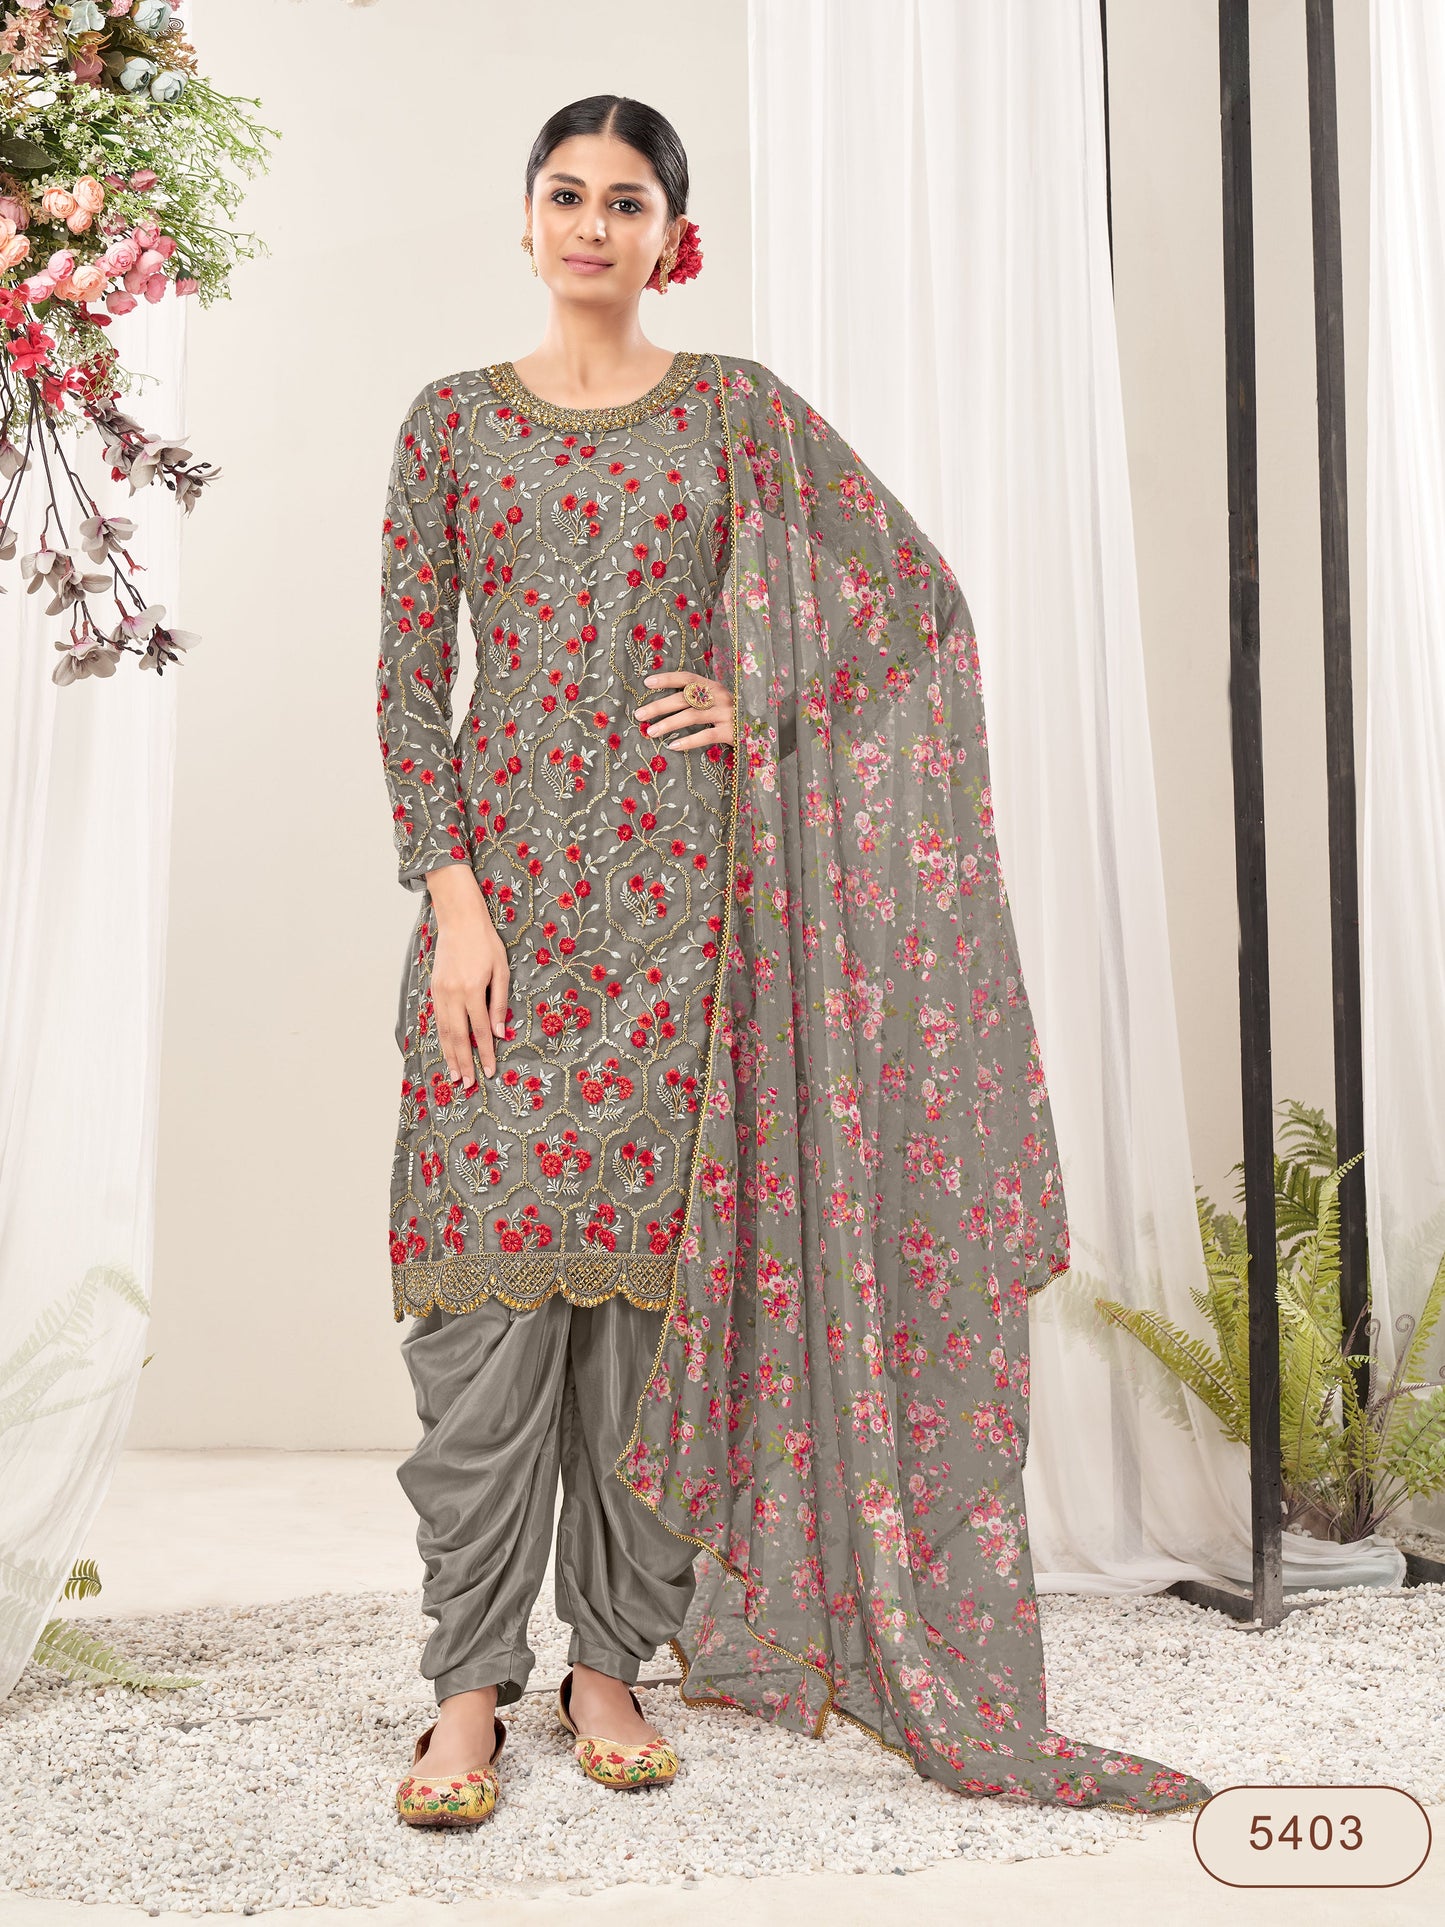 Stunning Salwar Kameez Collection with Traditional Elegance